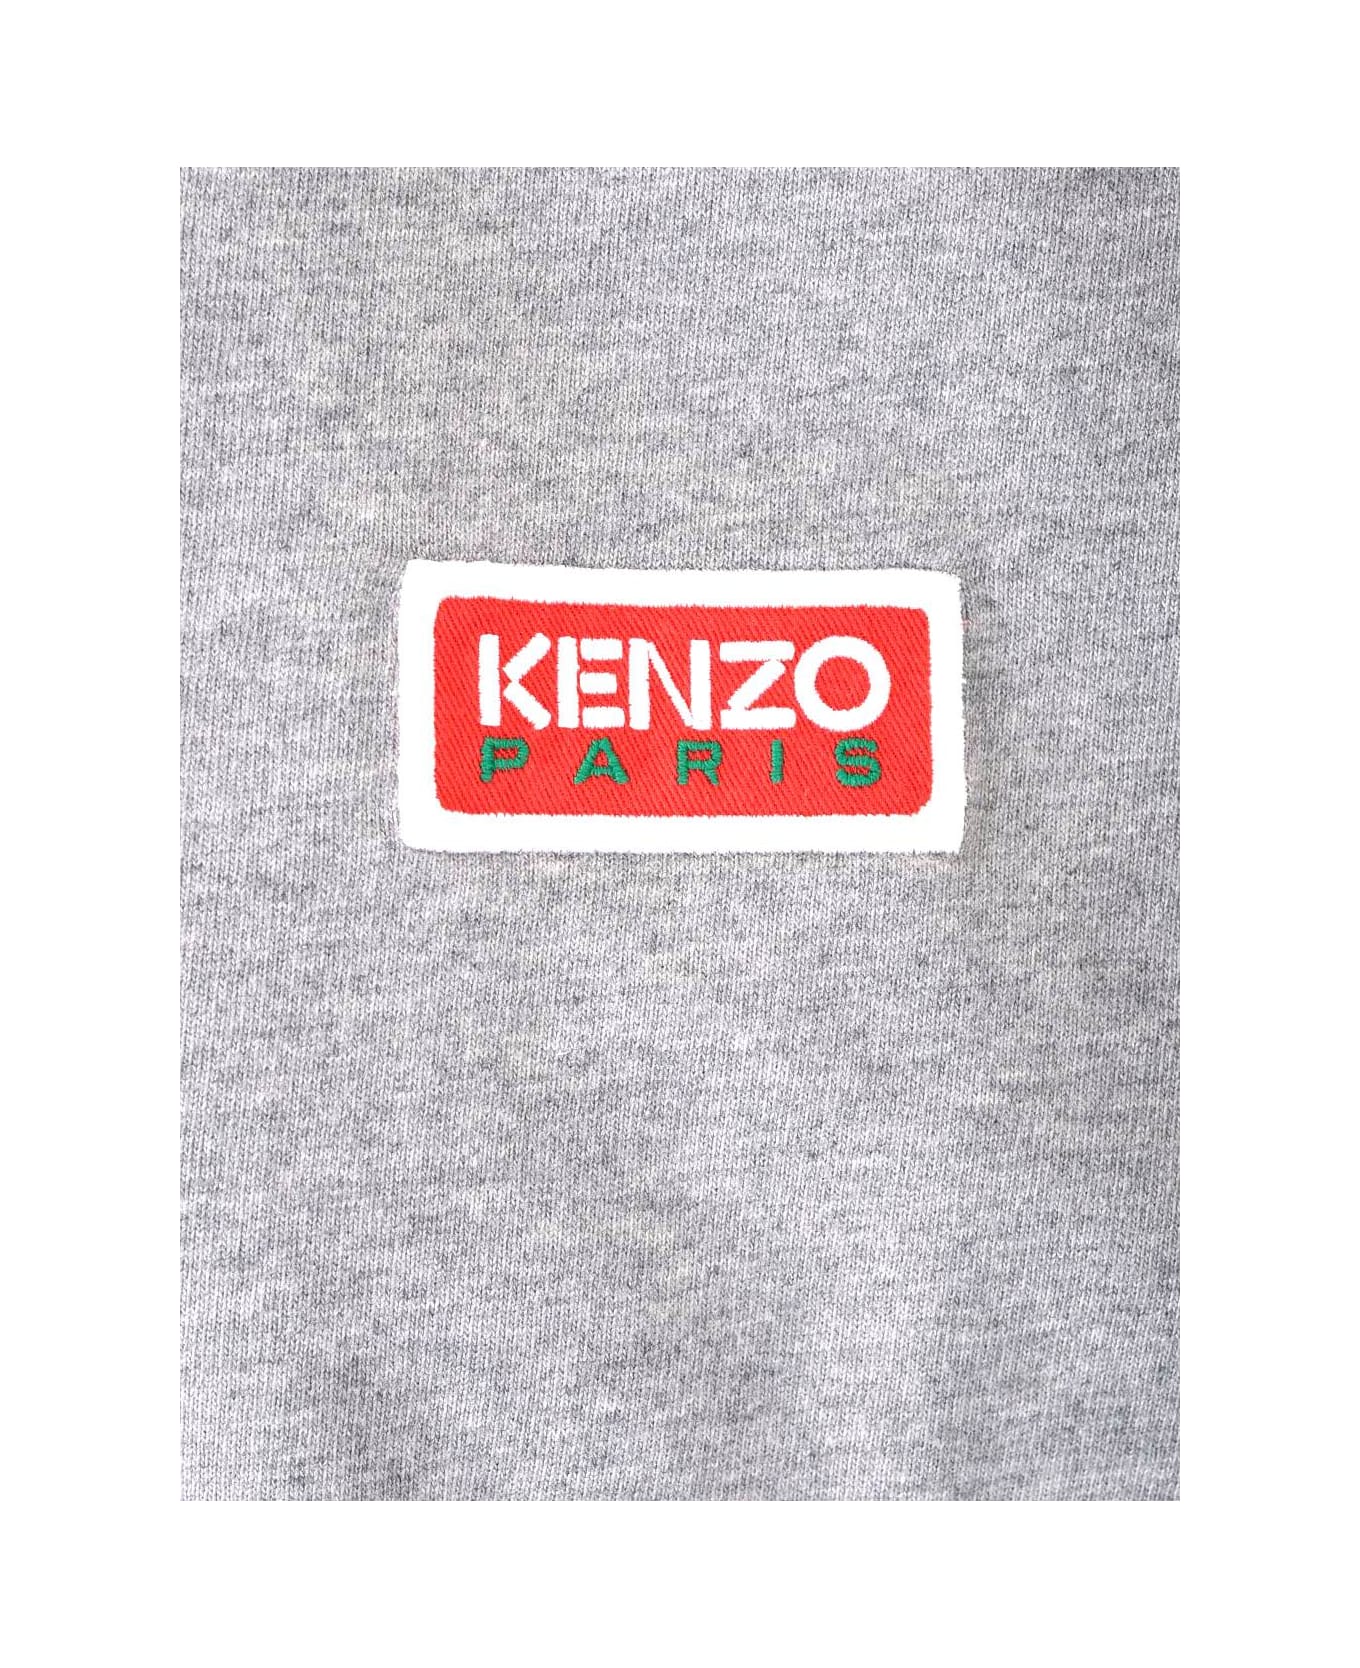 Kenzo Paris T-shirt - Grey